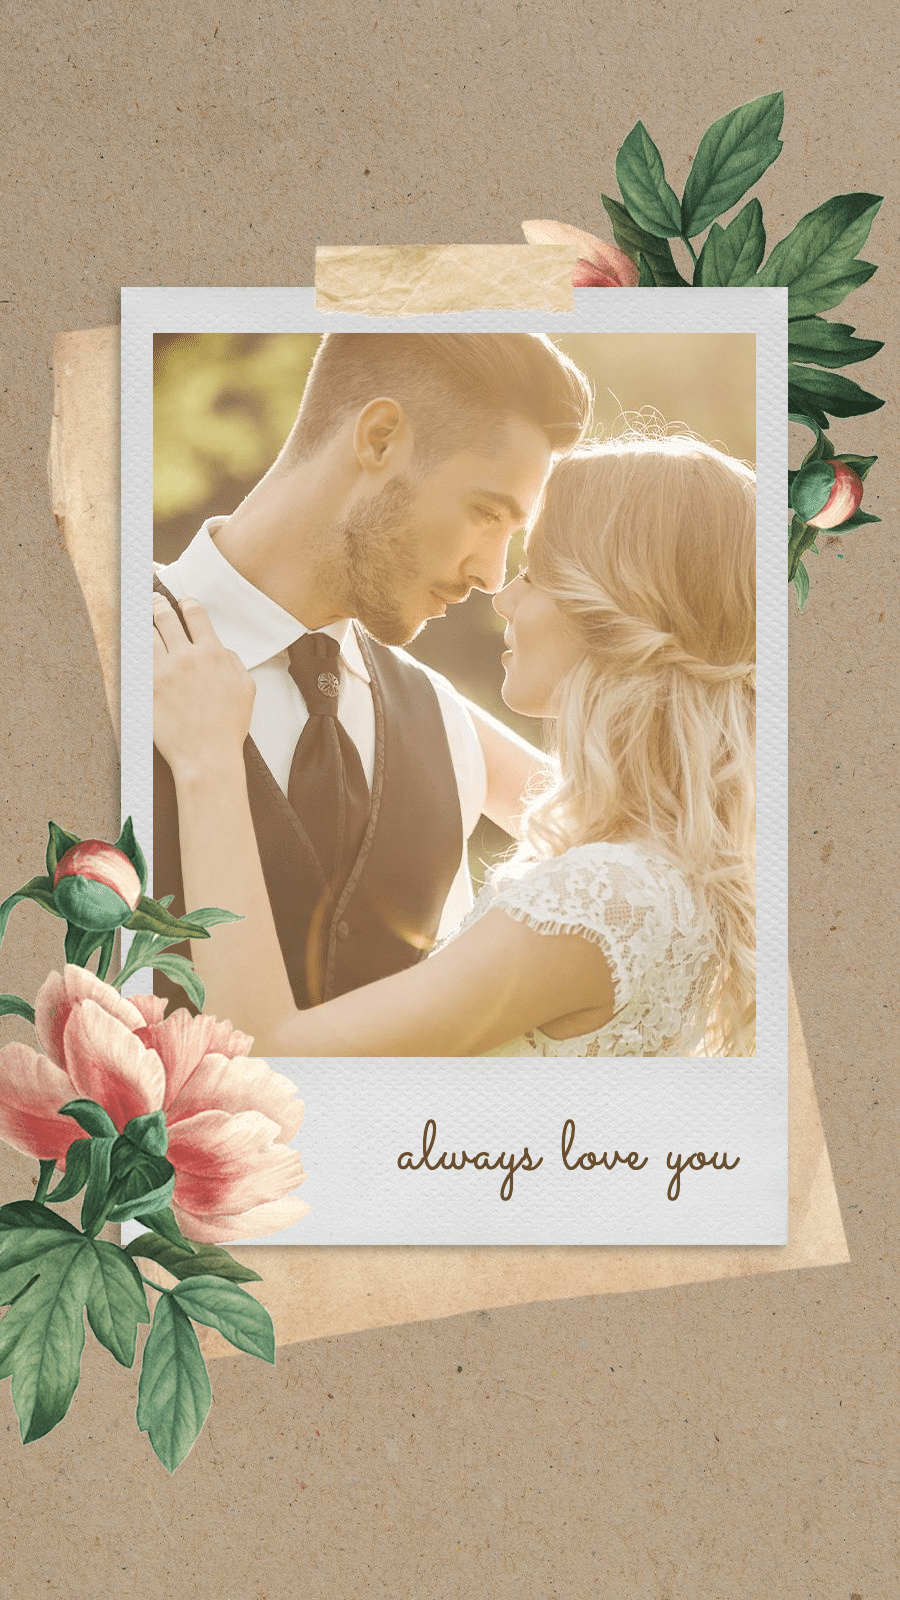 Gray Orange Background Flowers Frame Wedding Photo Fashion Simple Style Poster Instagram Post